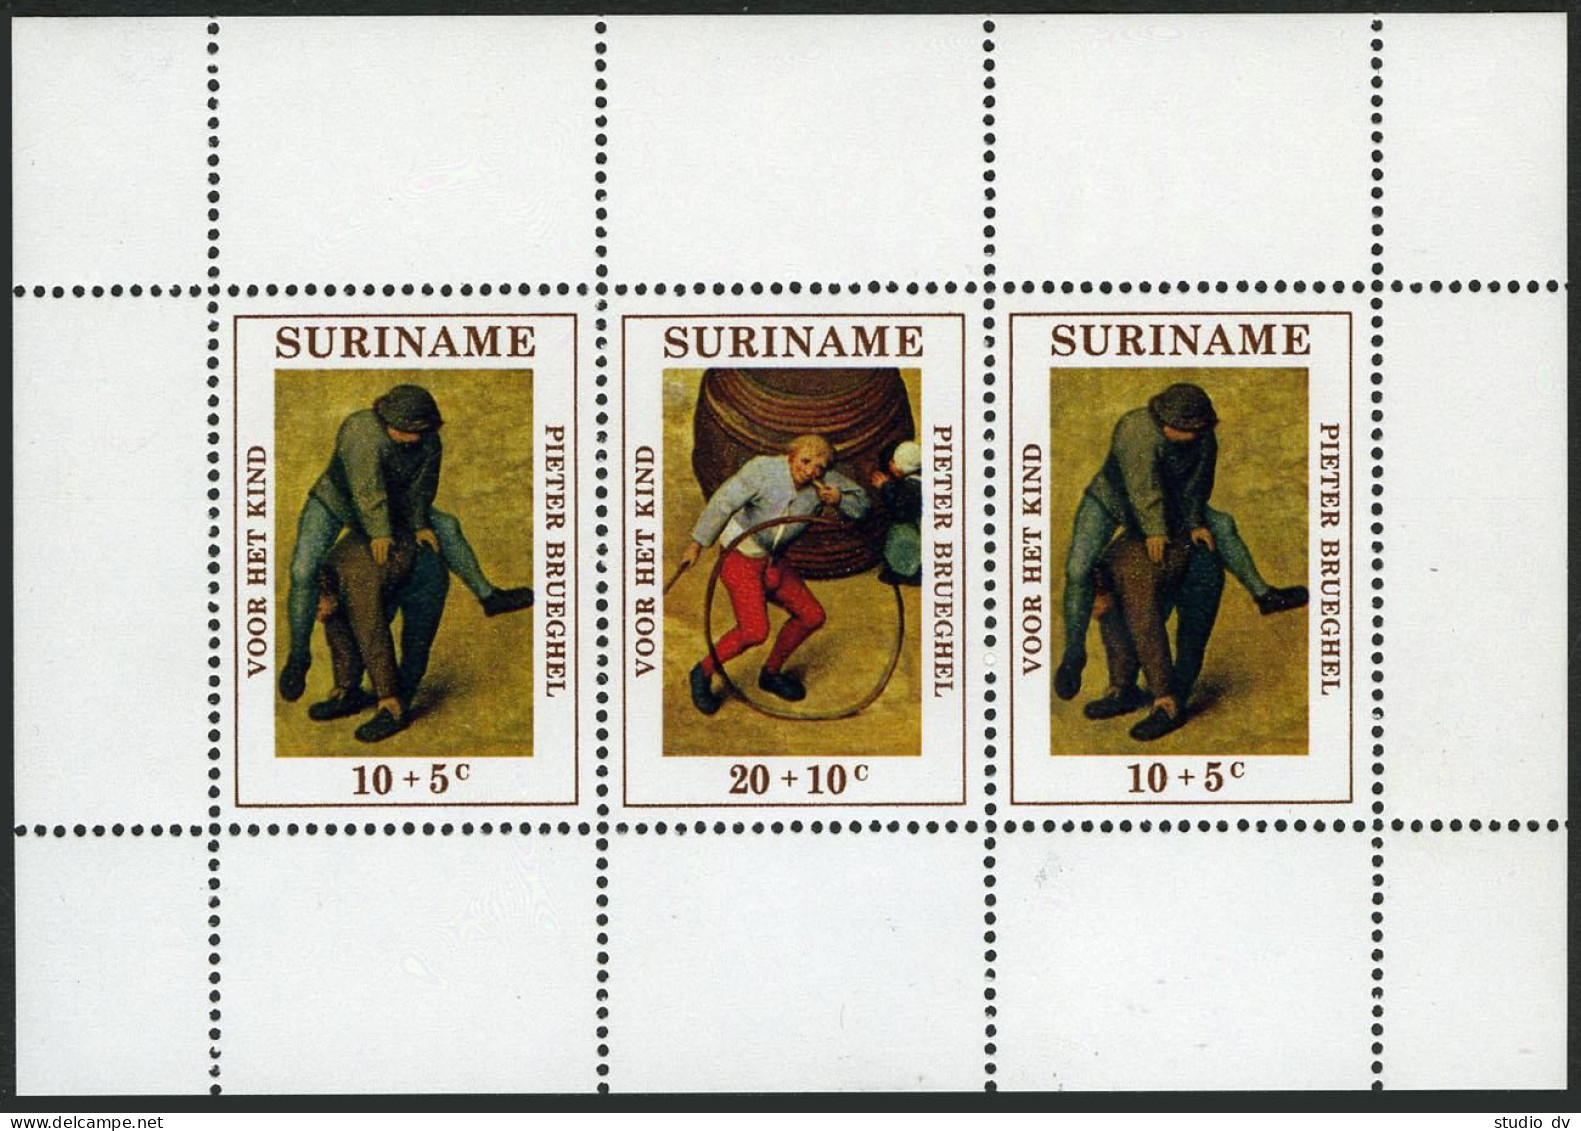 Surinam B179a Sheet, MNH. Michel Bl.11. Children Games By Peter Brueghel, 1971 - Surinam